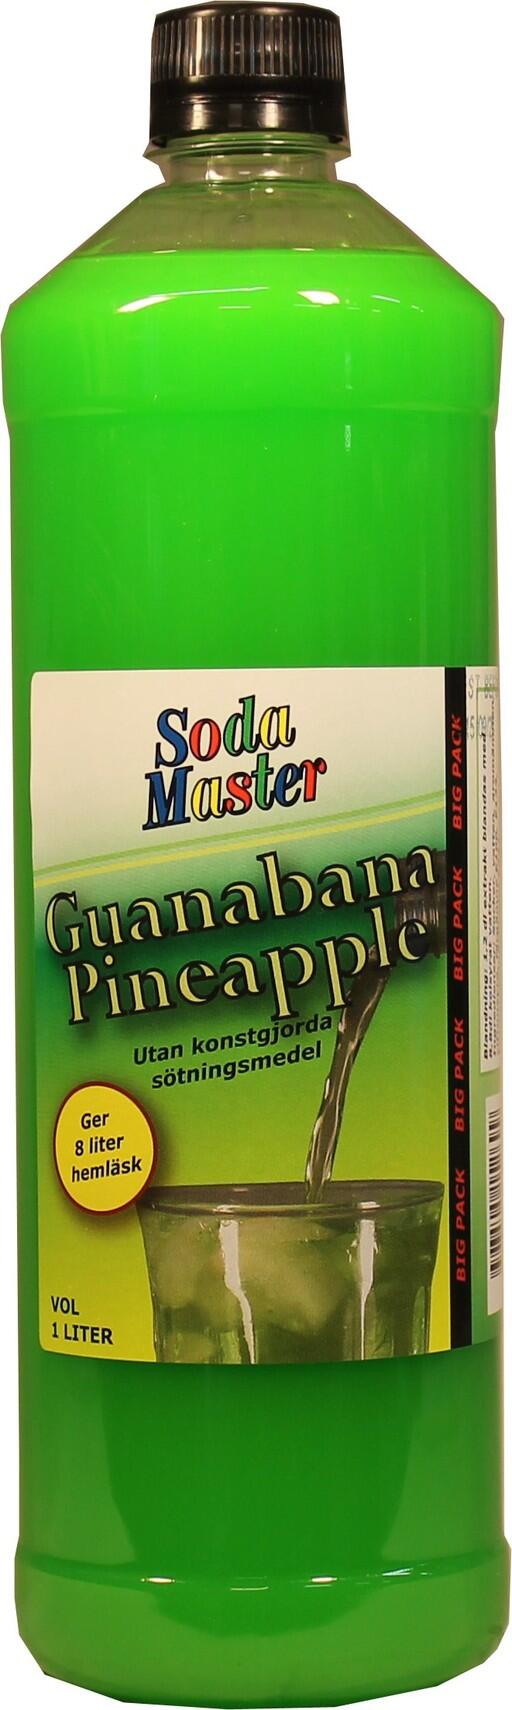 Guanabana Pineapple Läskkoncentrat.